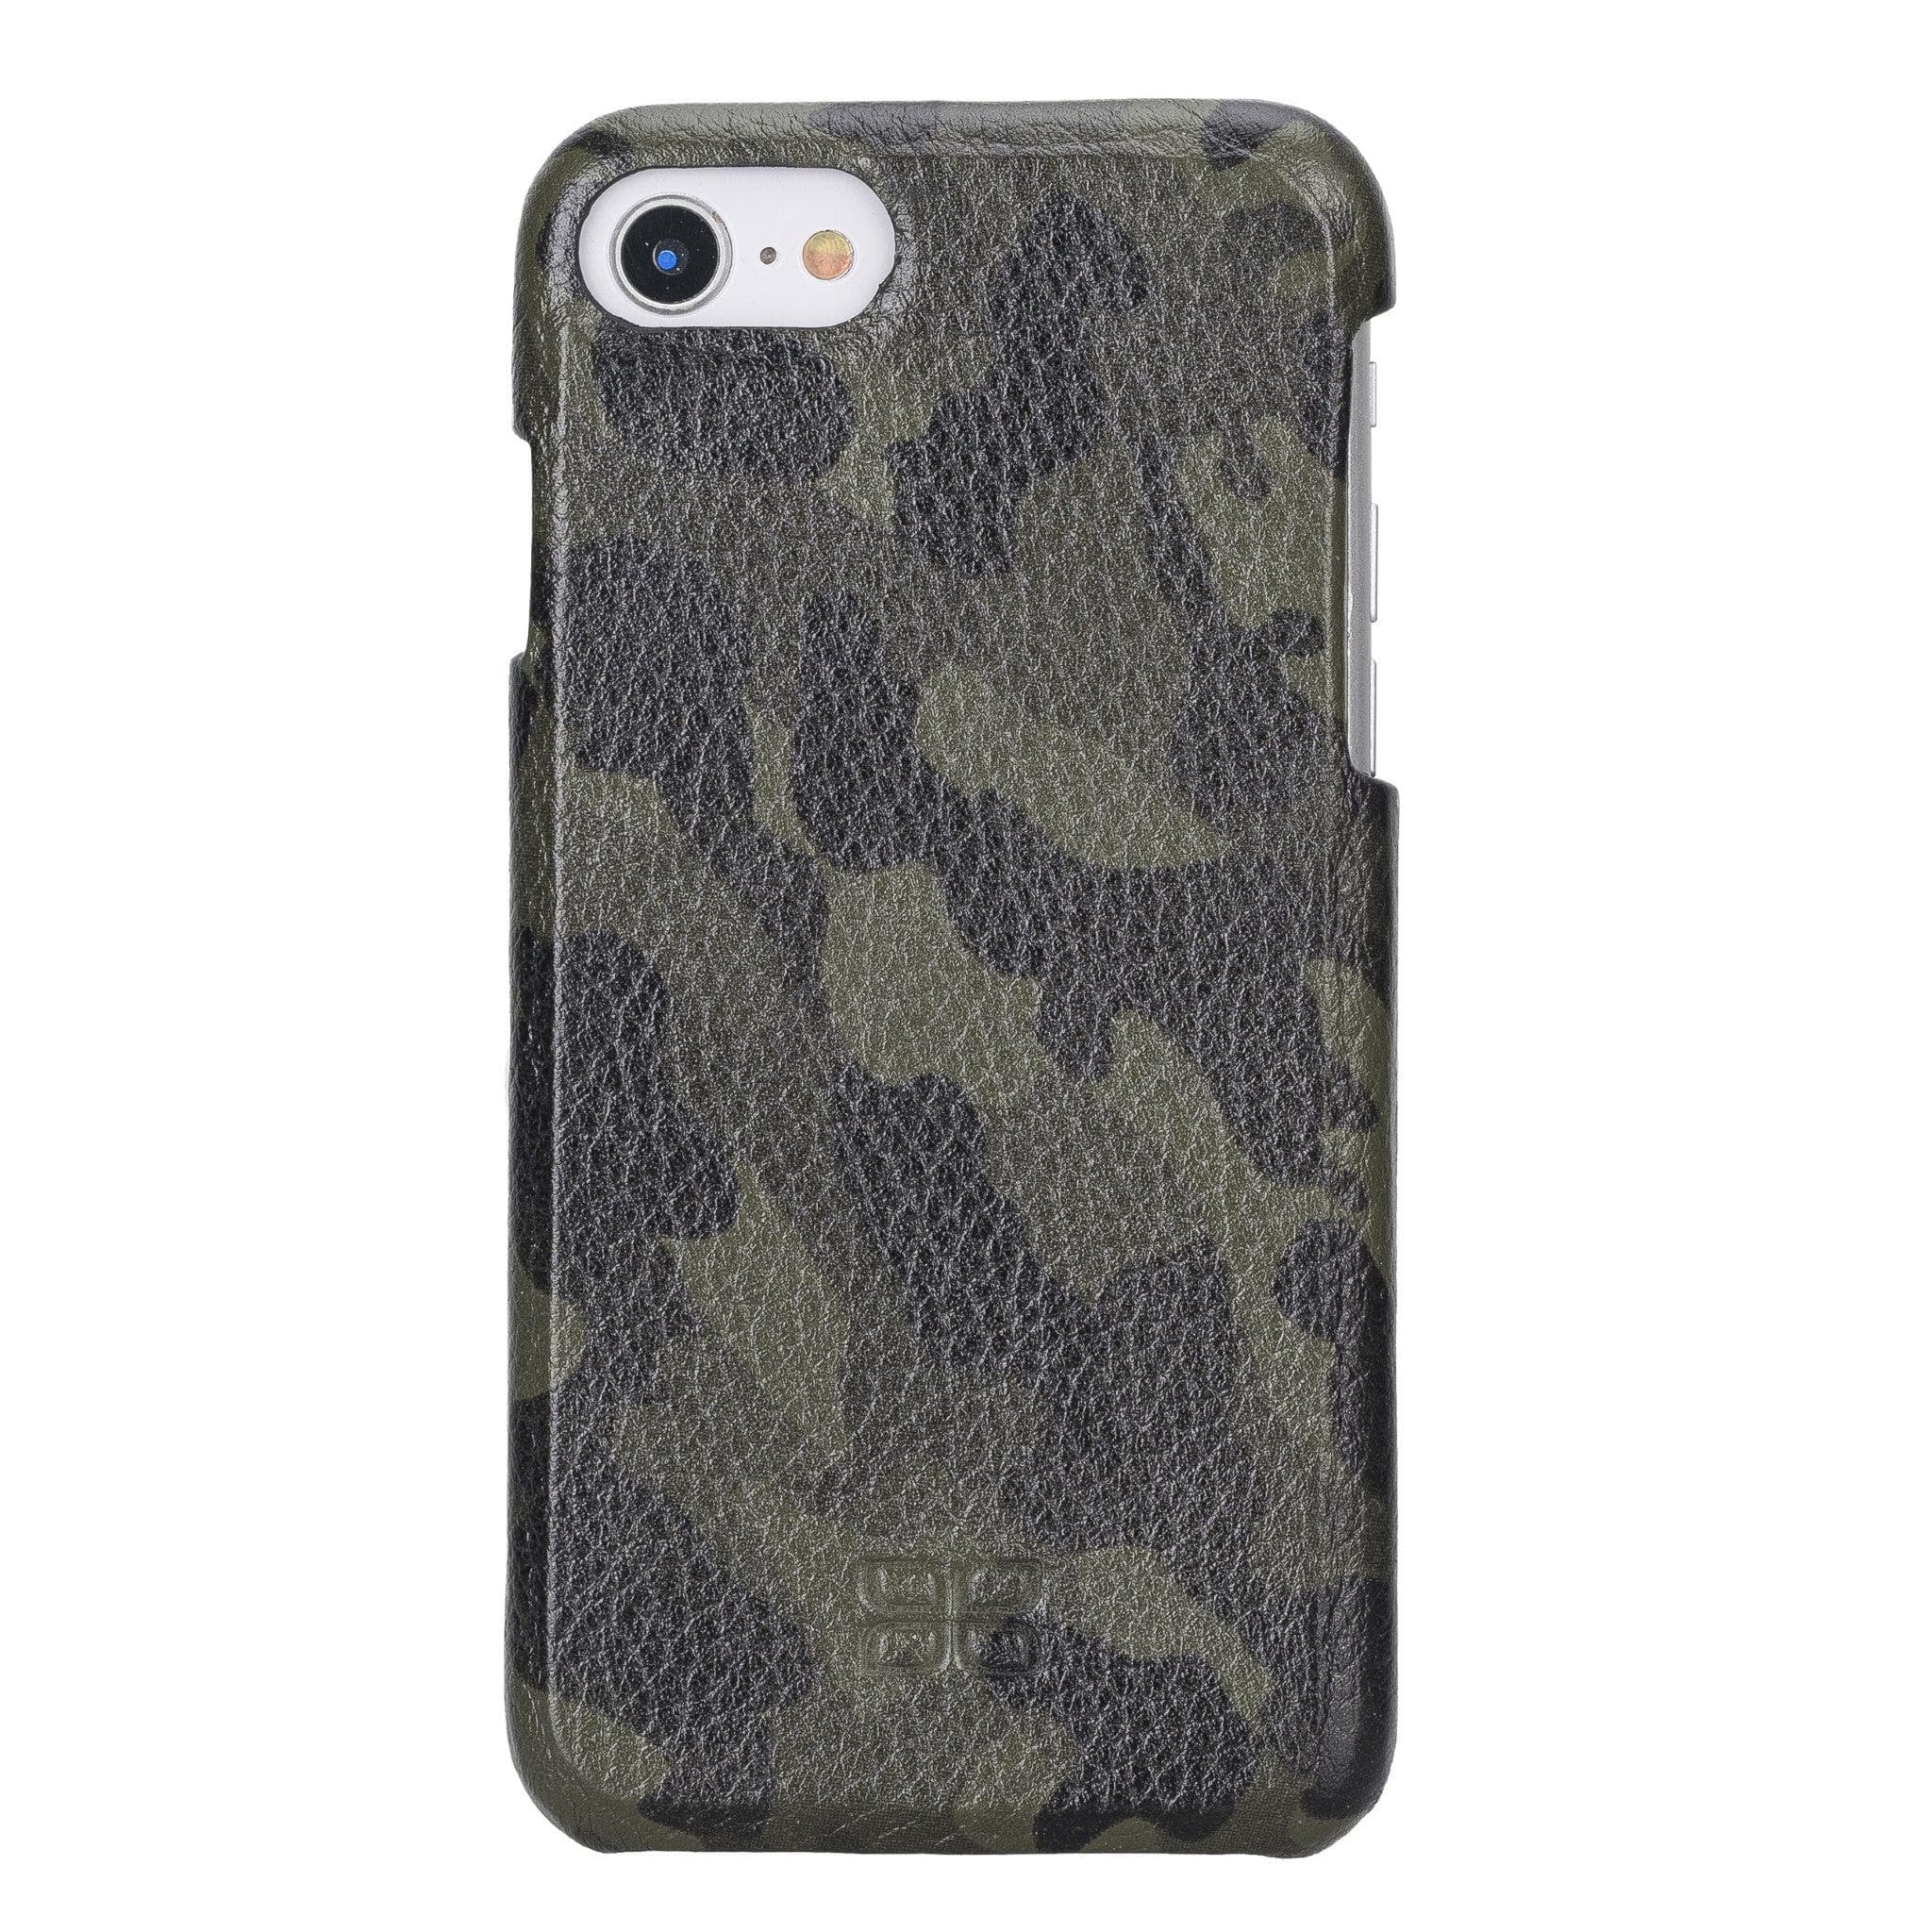 Apple iPhone 7 Series F360 Leather Back Cover Case iPhone 7 / Camouflage Bornbor LTD